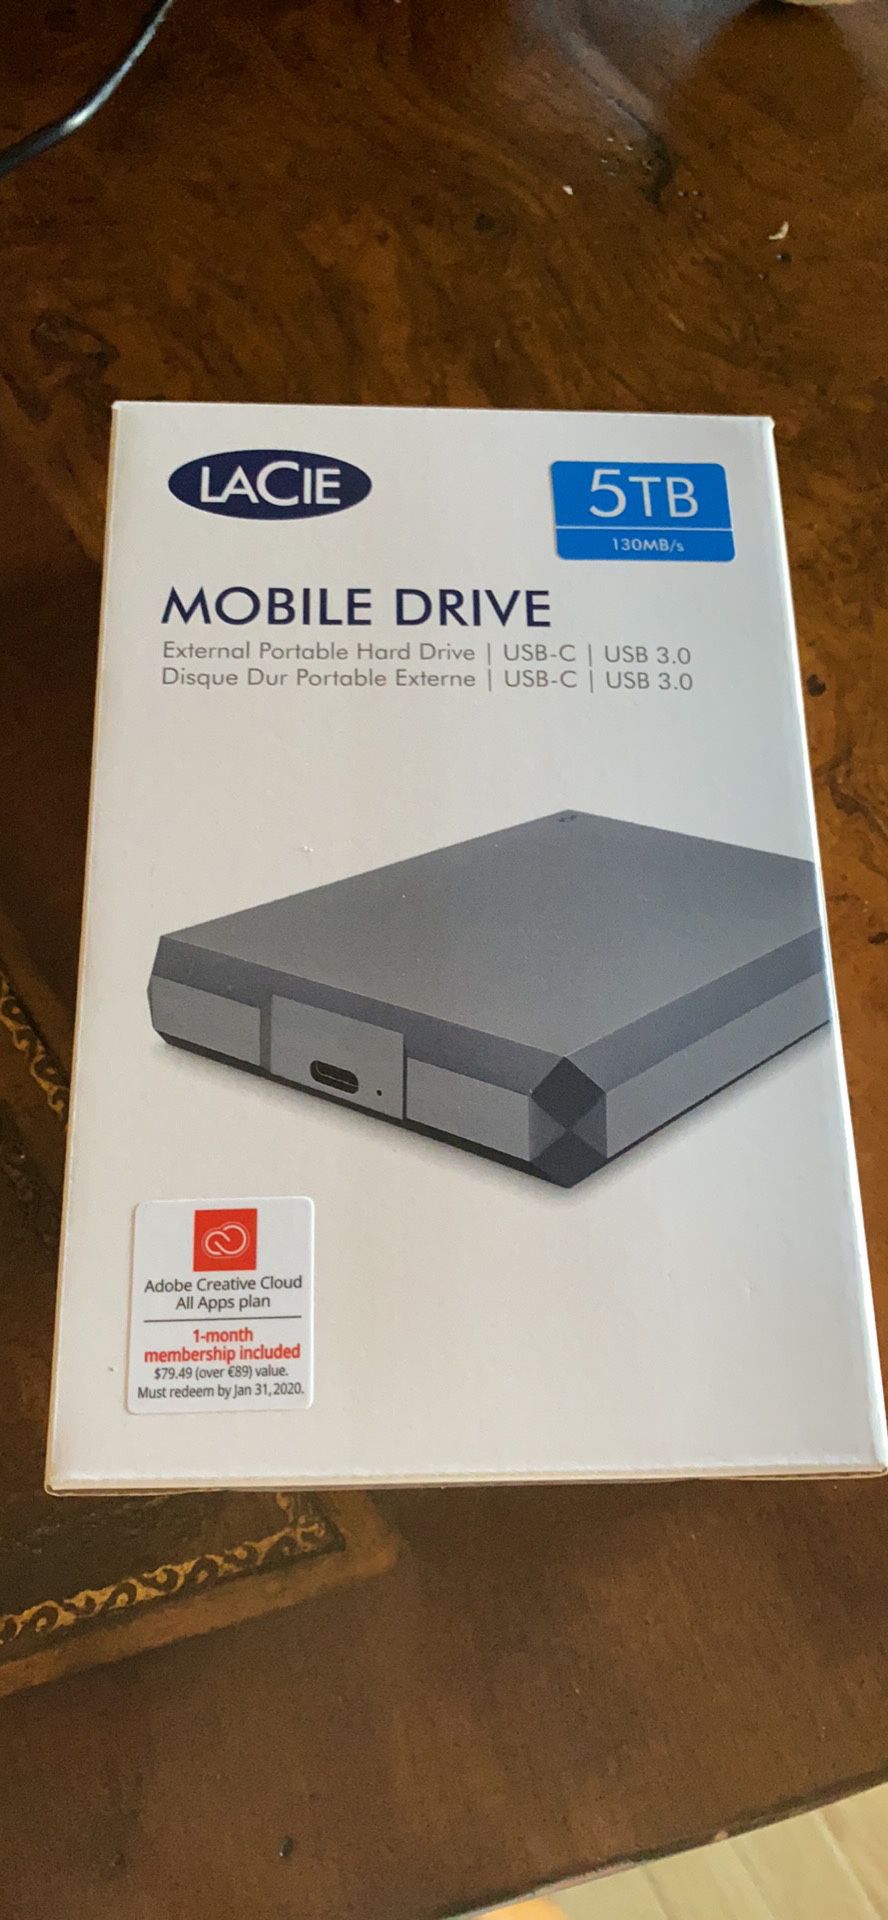 NEW: LaCie Mobile Drive 5TB External Hard Drive USB-C